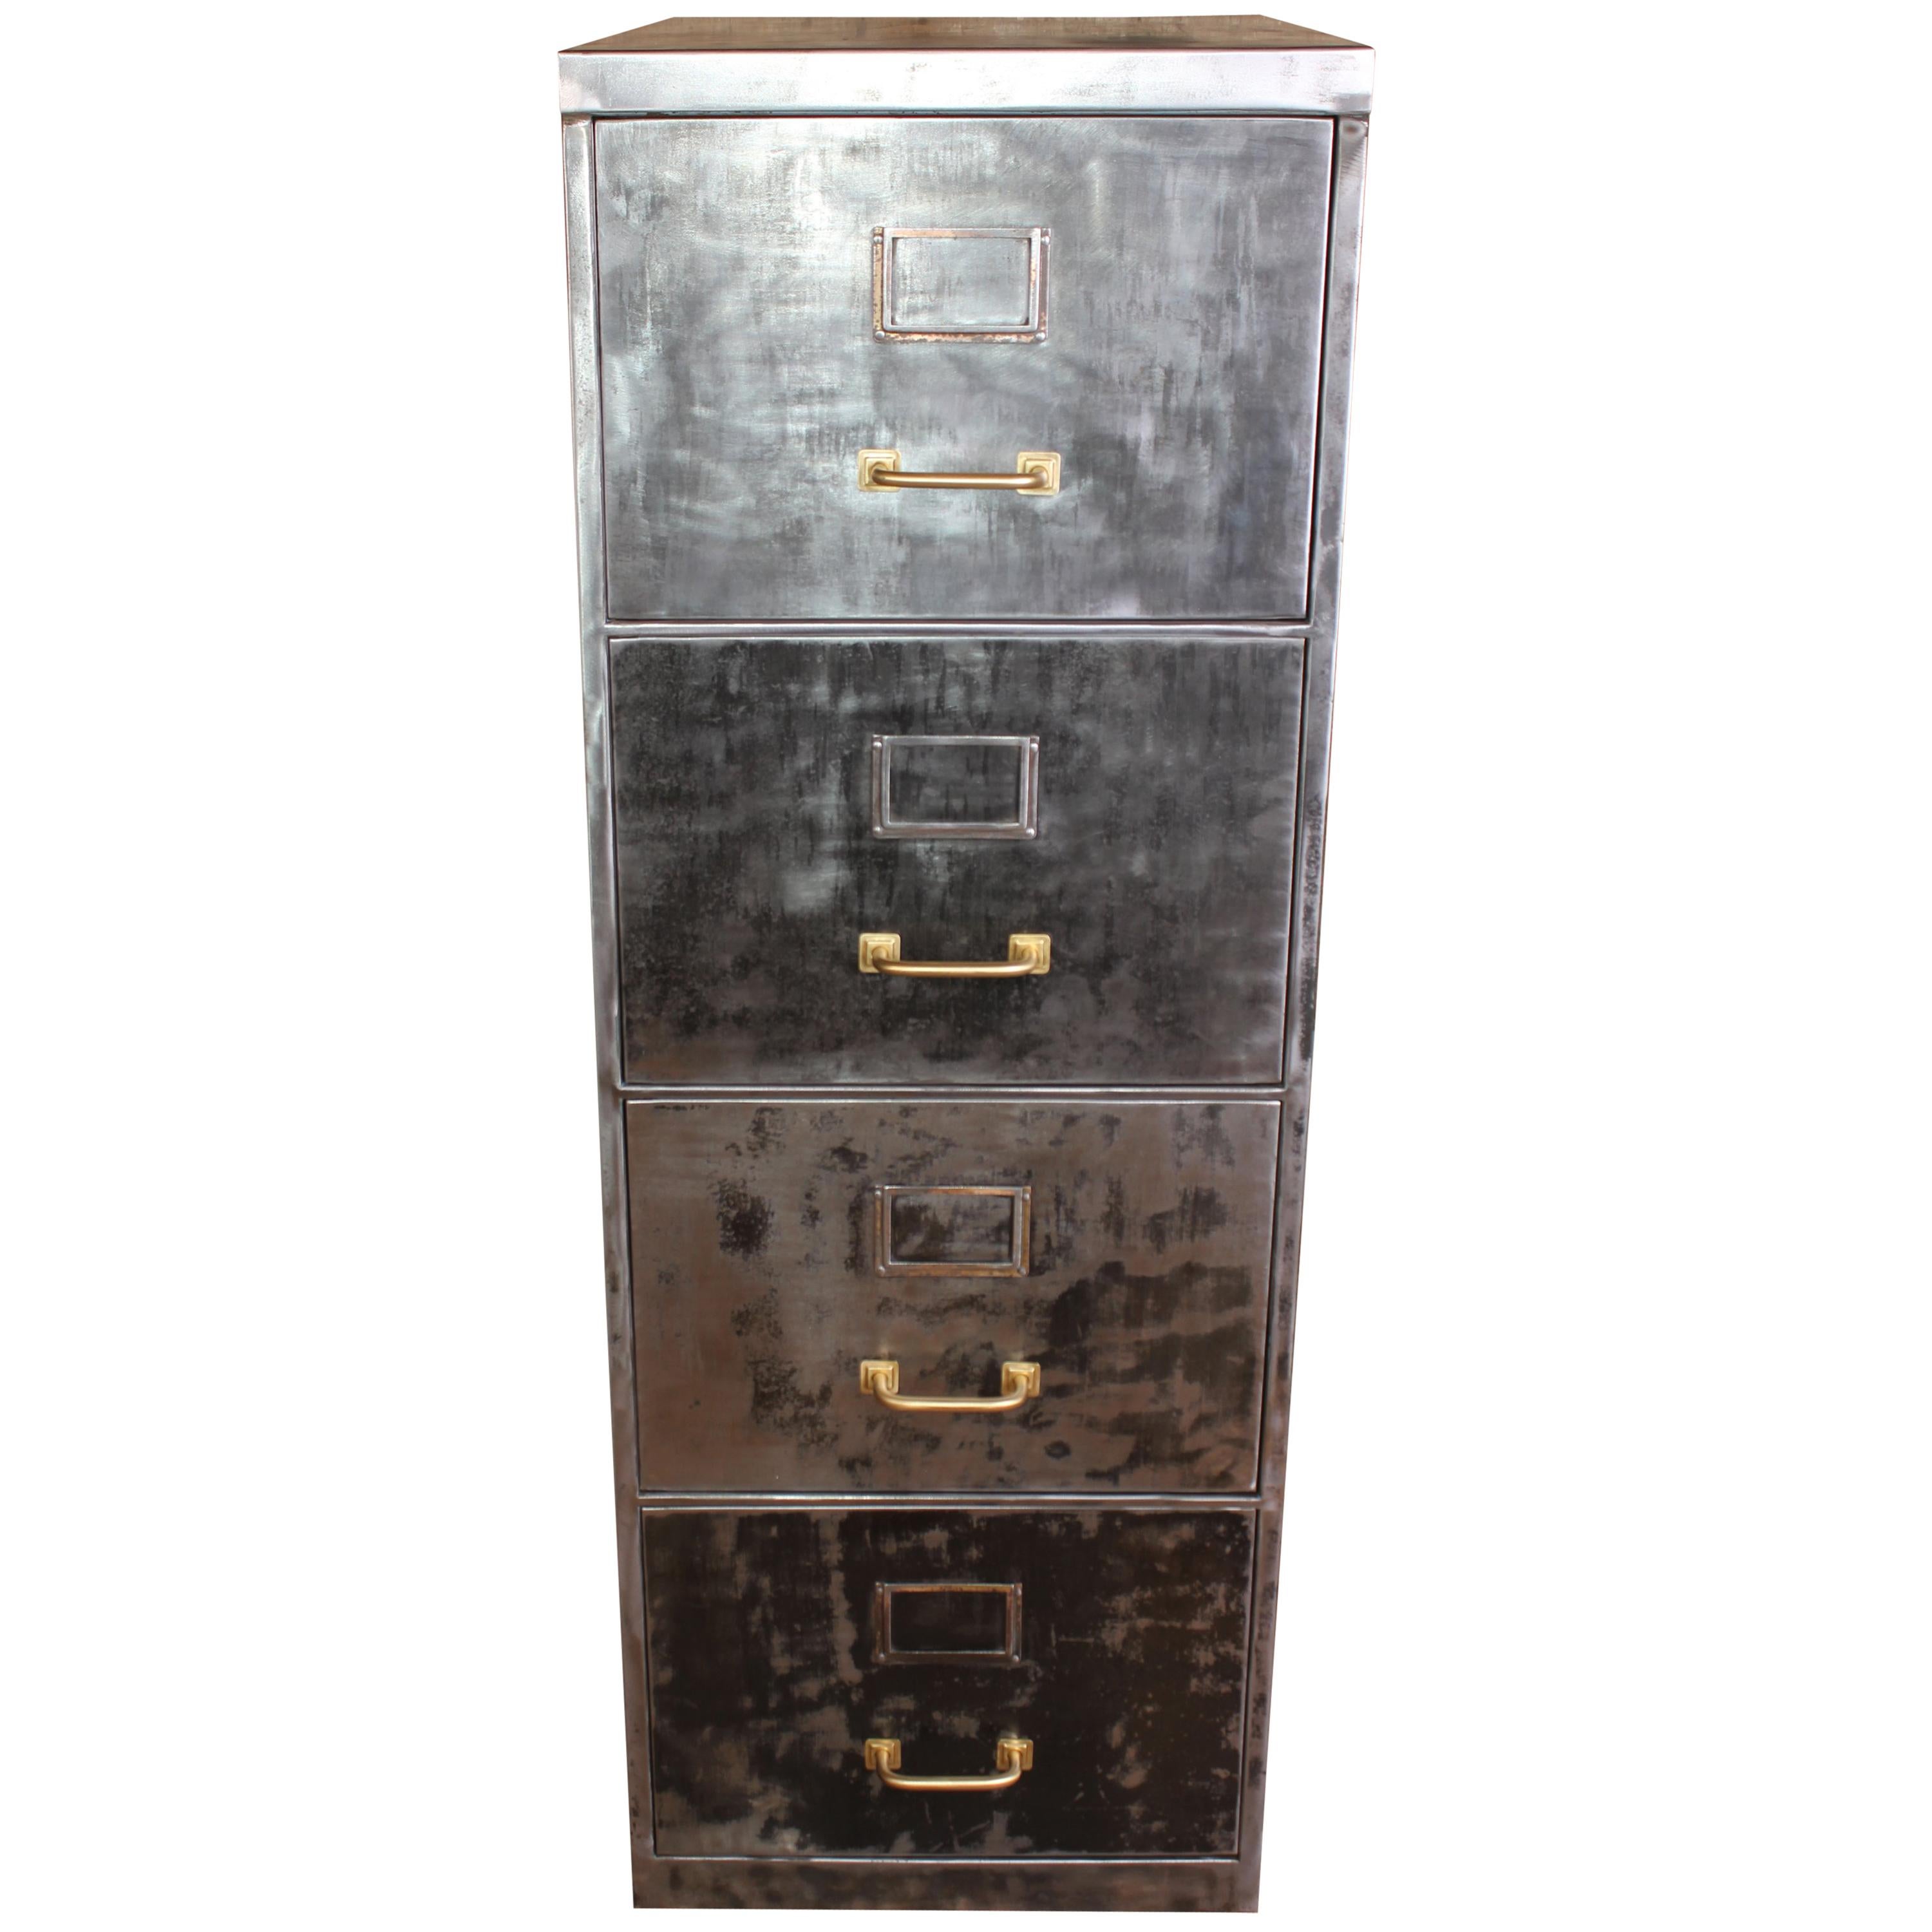 Vintage Industrial Stripped Metal 4-Drawer Filing Cabinet